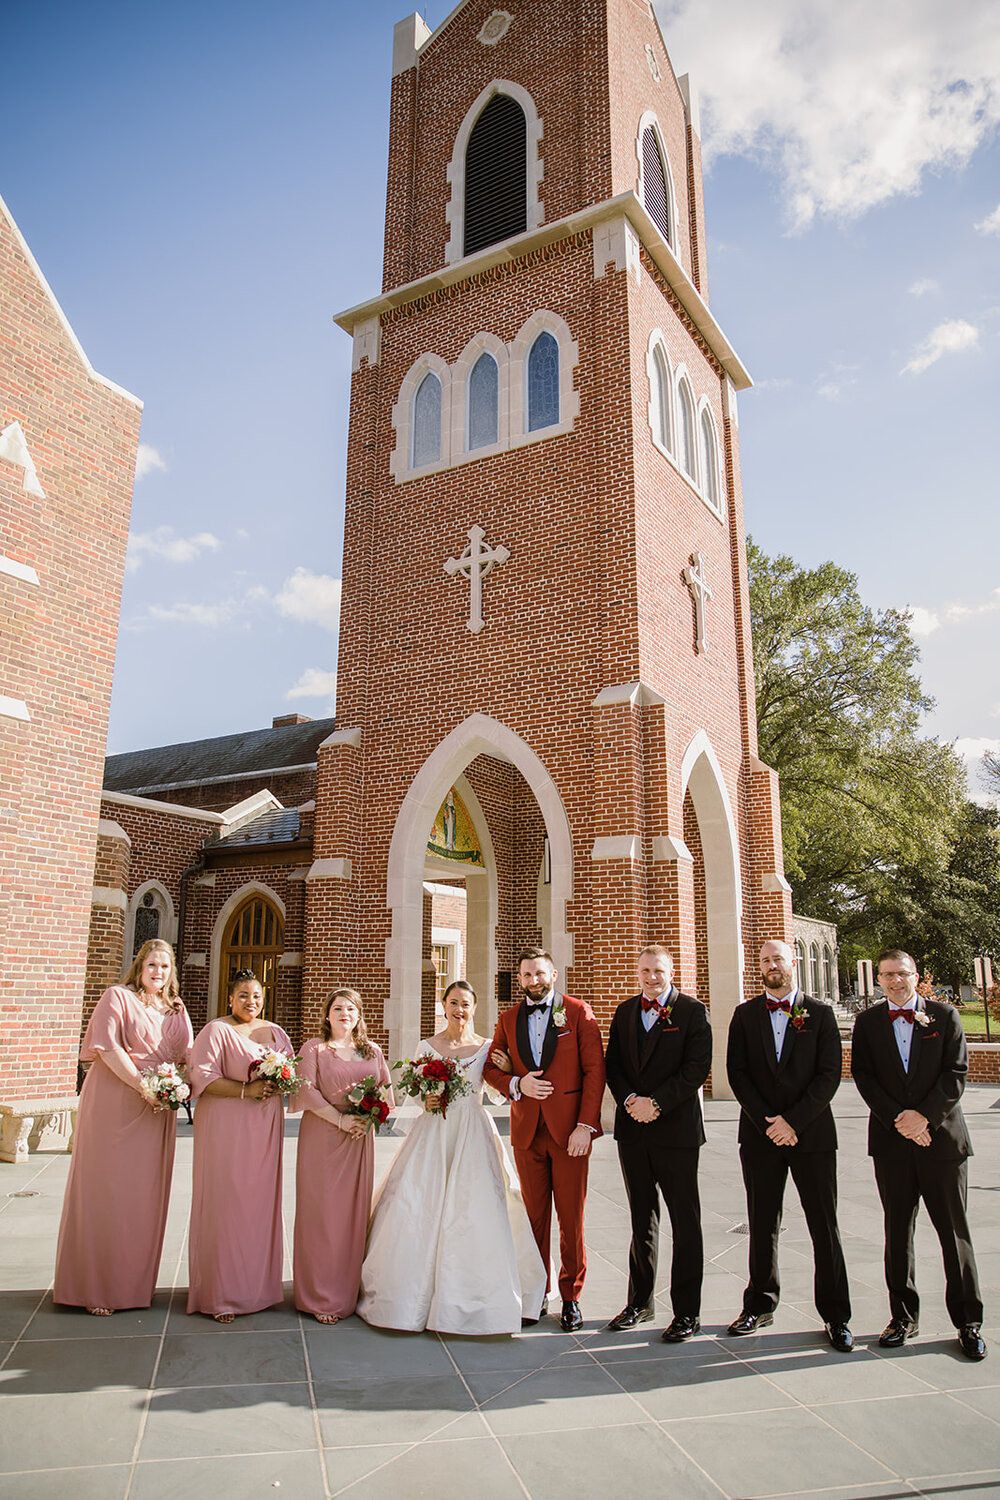  Wedding Party Portraits | Romantic wedding at St. Bridget Catholic Church, Richmond, VA | Black tie wedding with a red tux and custom Anne Barge gown 